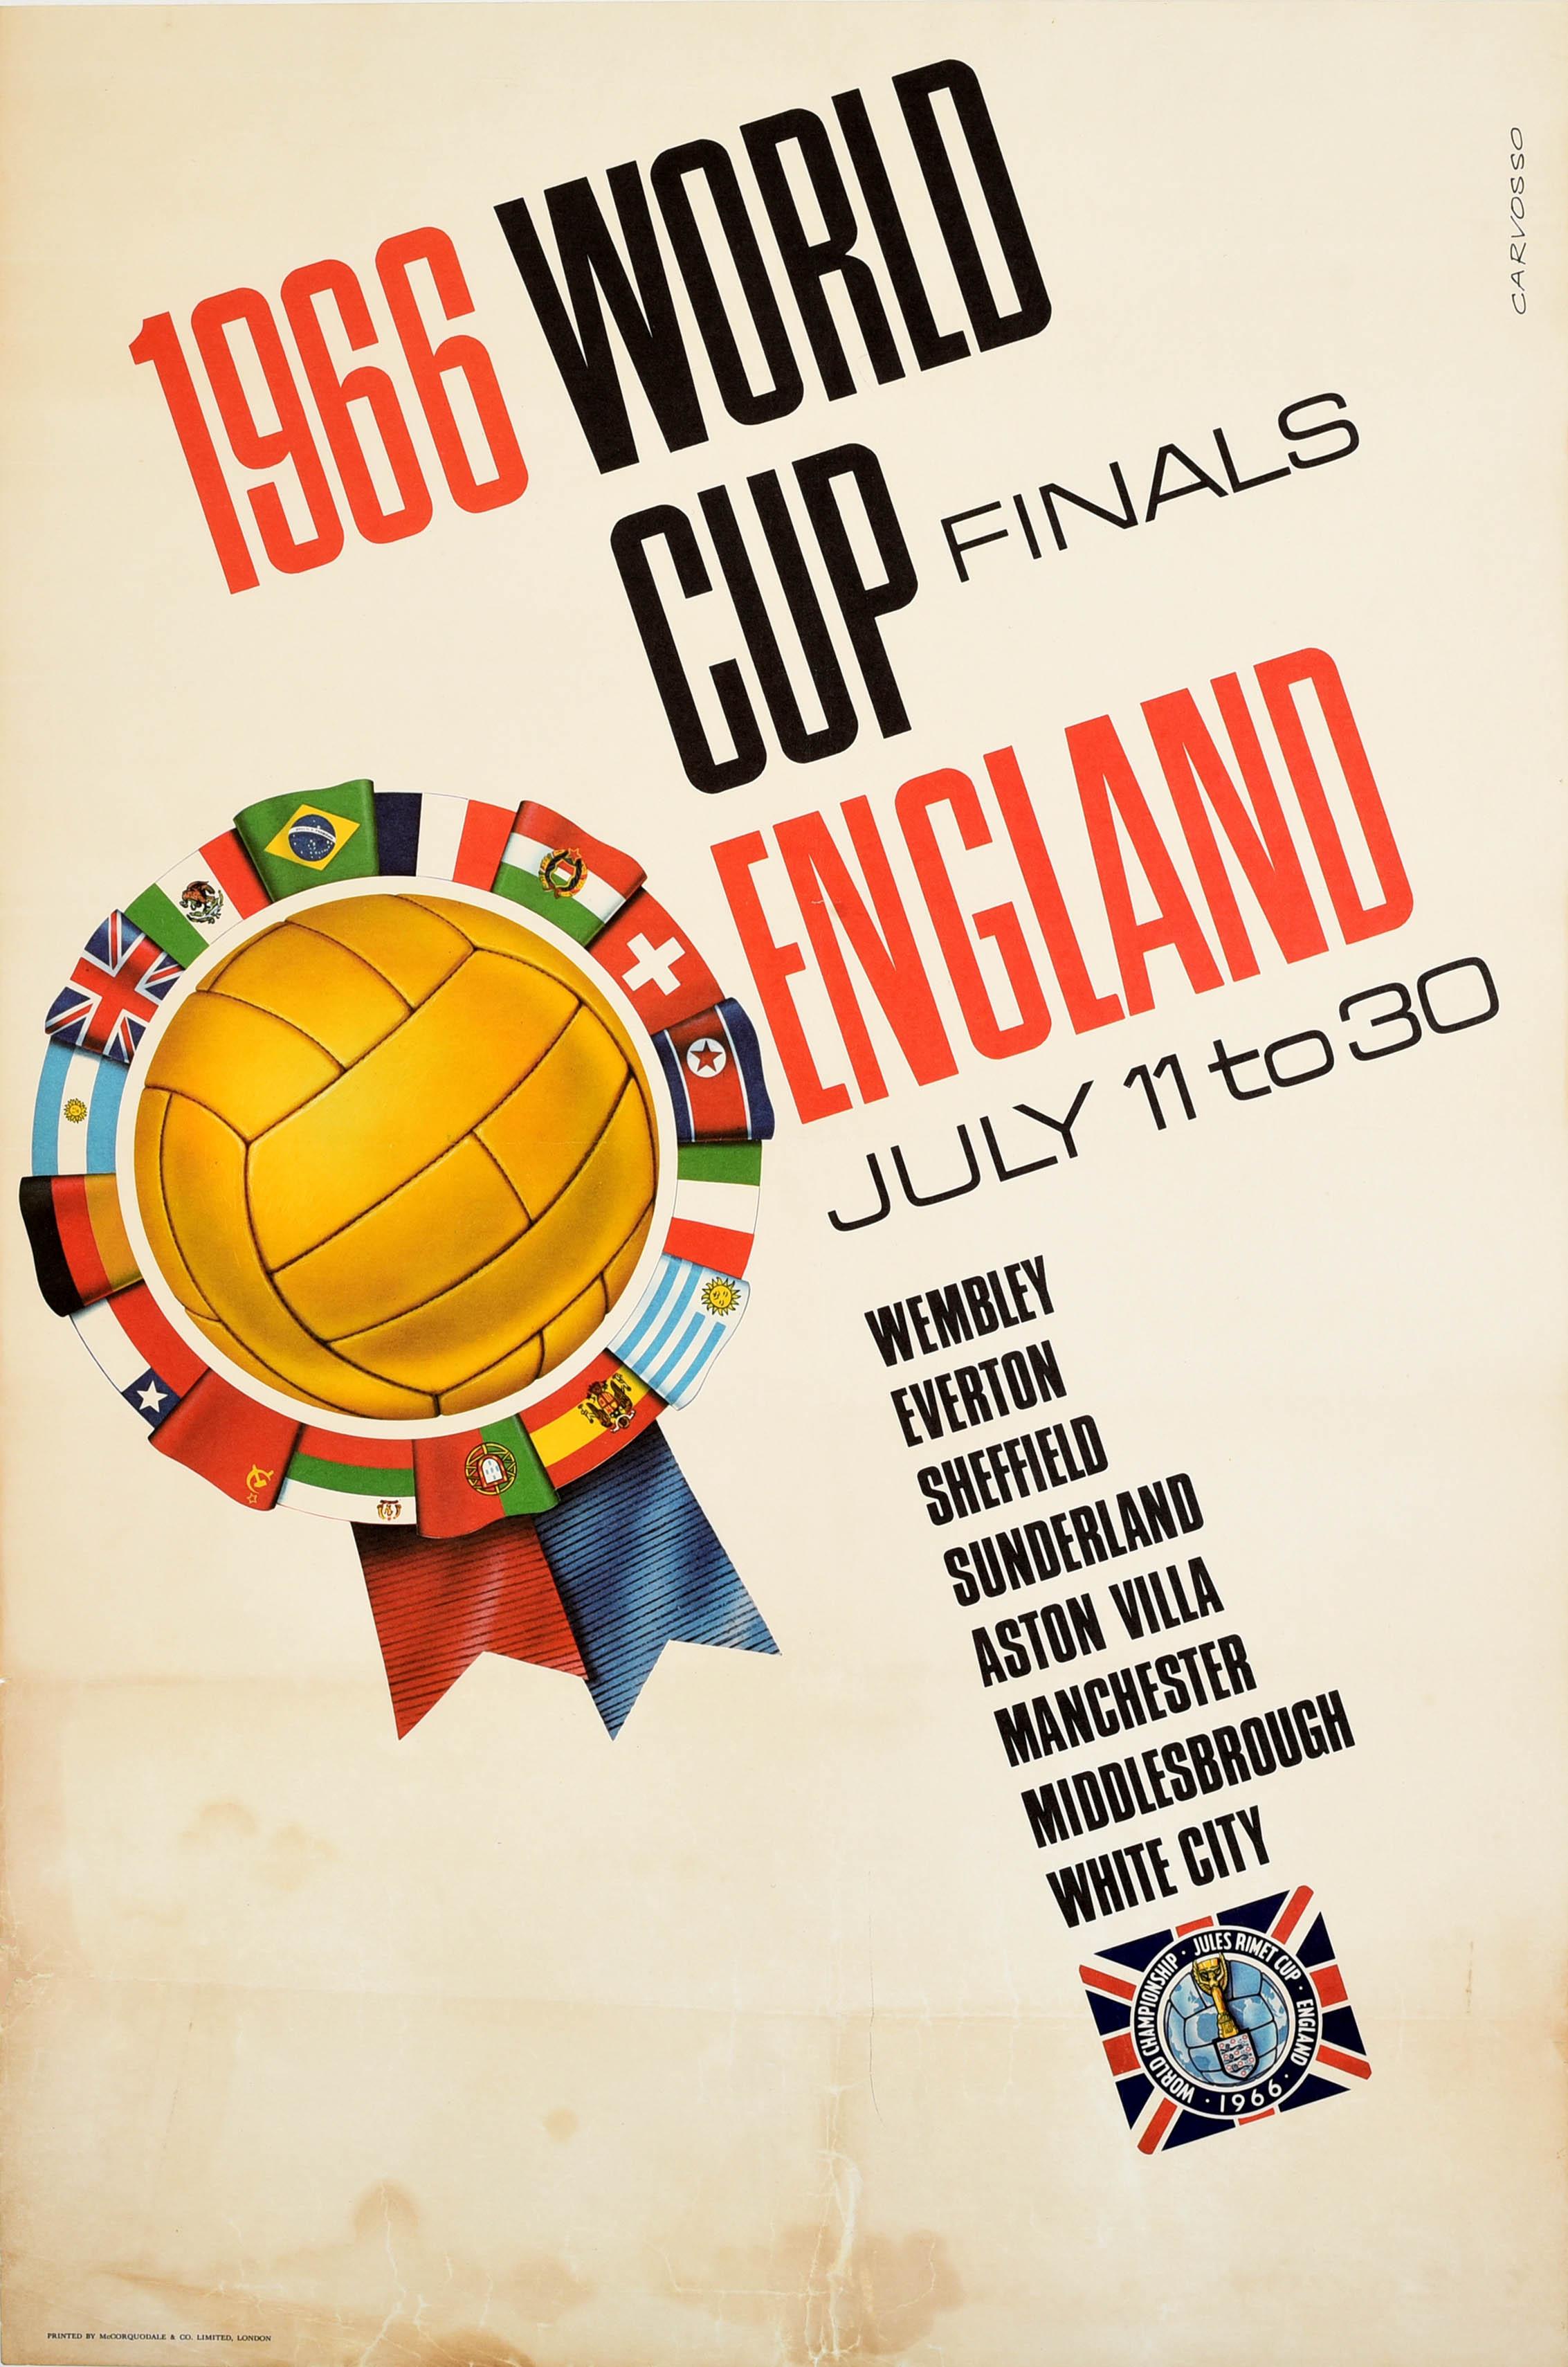 Carvosso Print - Original Vintage Sport Poster 1966 World Cup Finals England Football Wembley